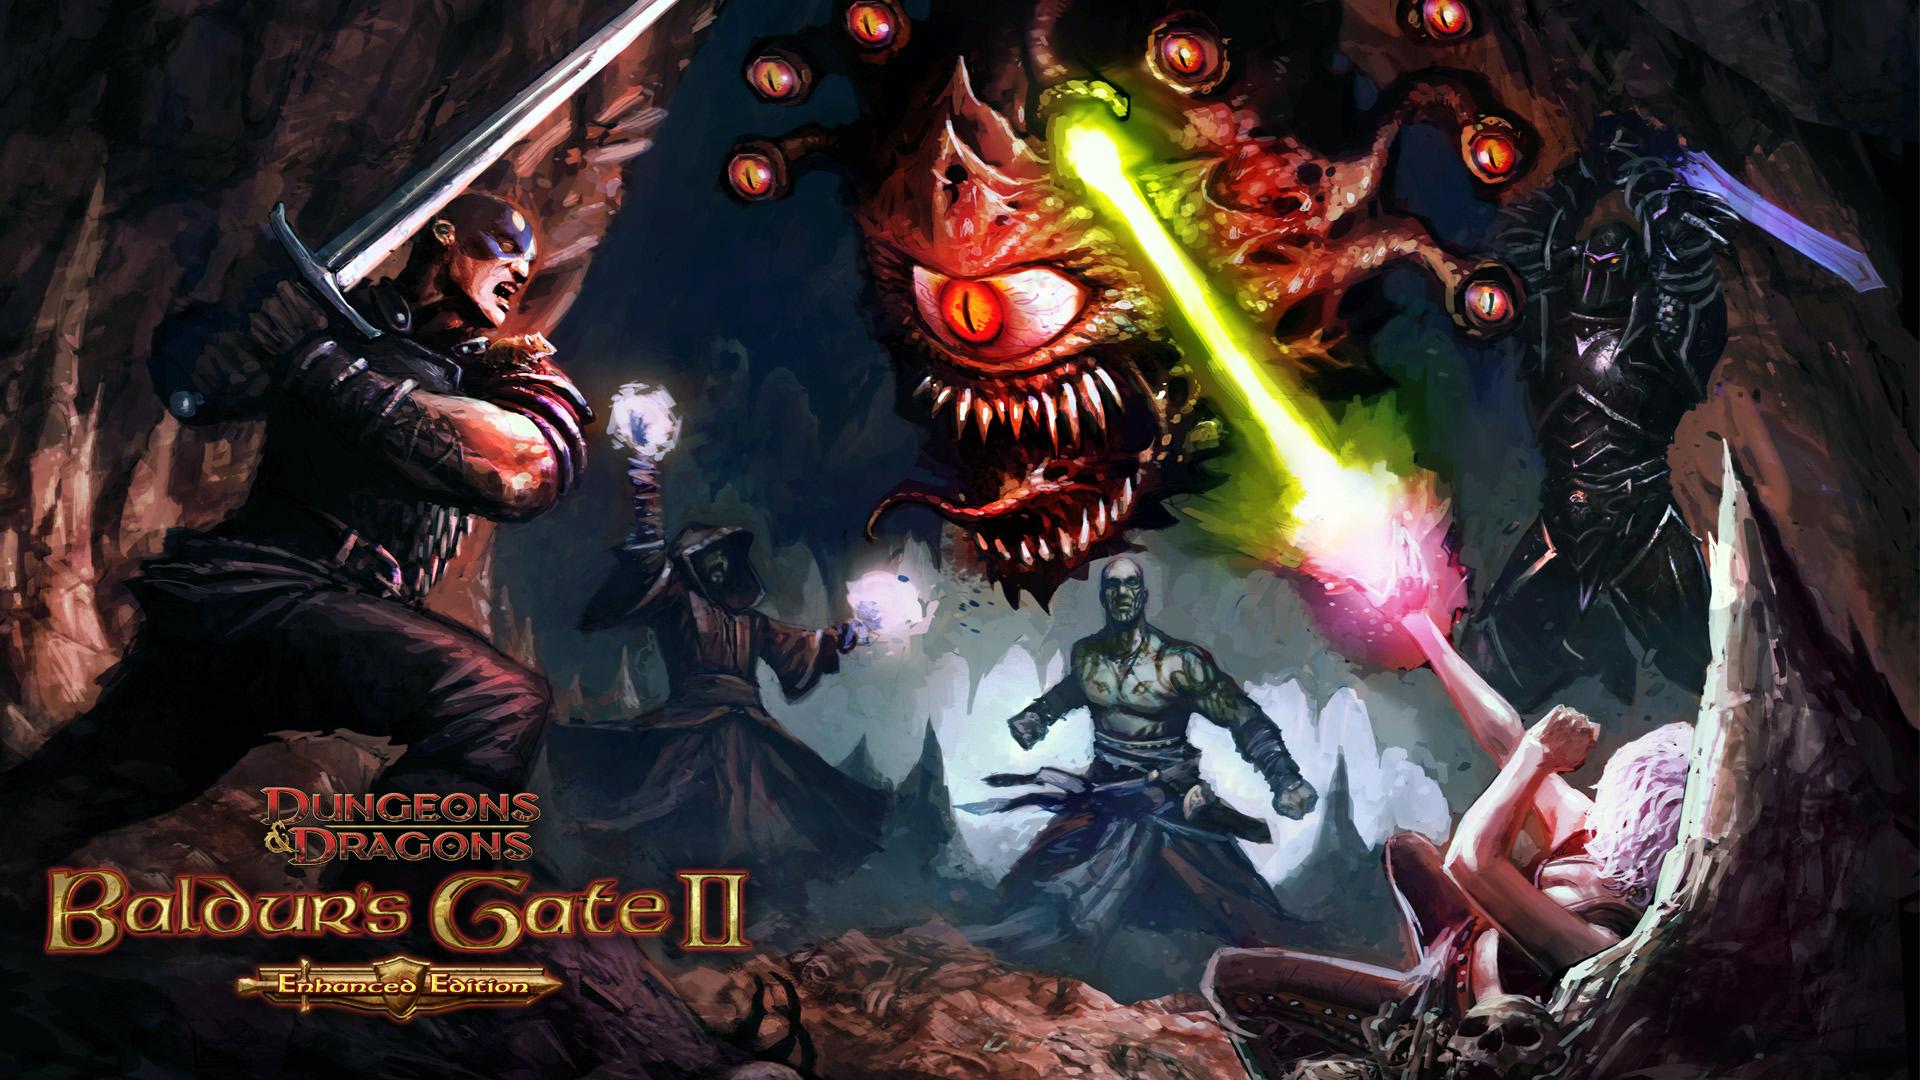 Check Out these Newly Enhanced Screenshots for Baldur's Gate